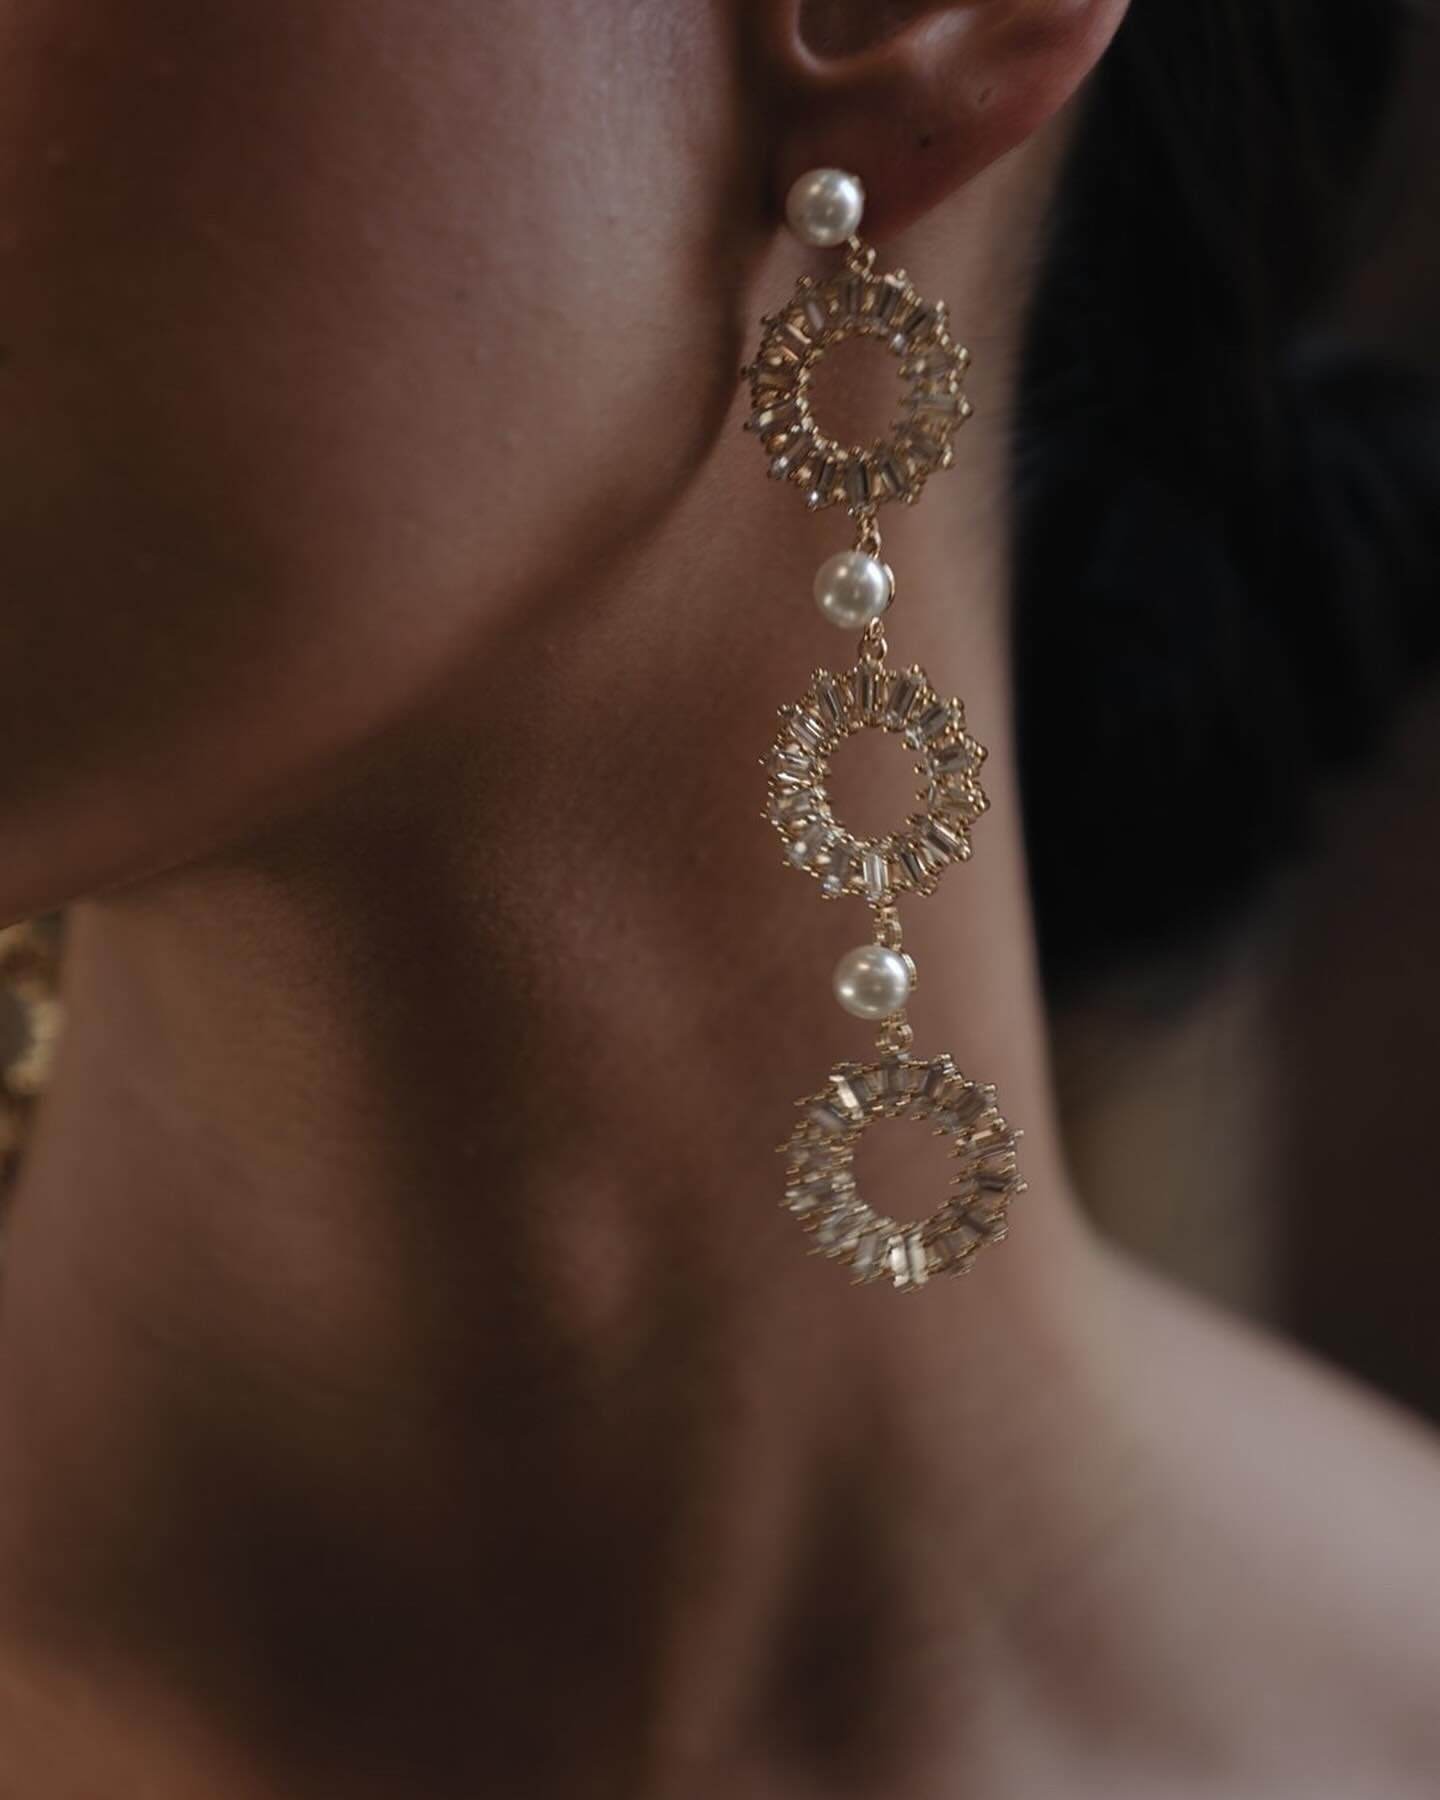 The Quinn &mdash; shining just for you 🎀 Capture it, remember it 🤍 @jadeoistudio 

Shop more bridal earrings style at jadeoi.com 🫶🏼